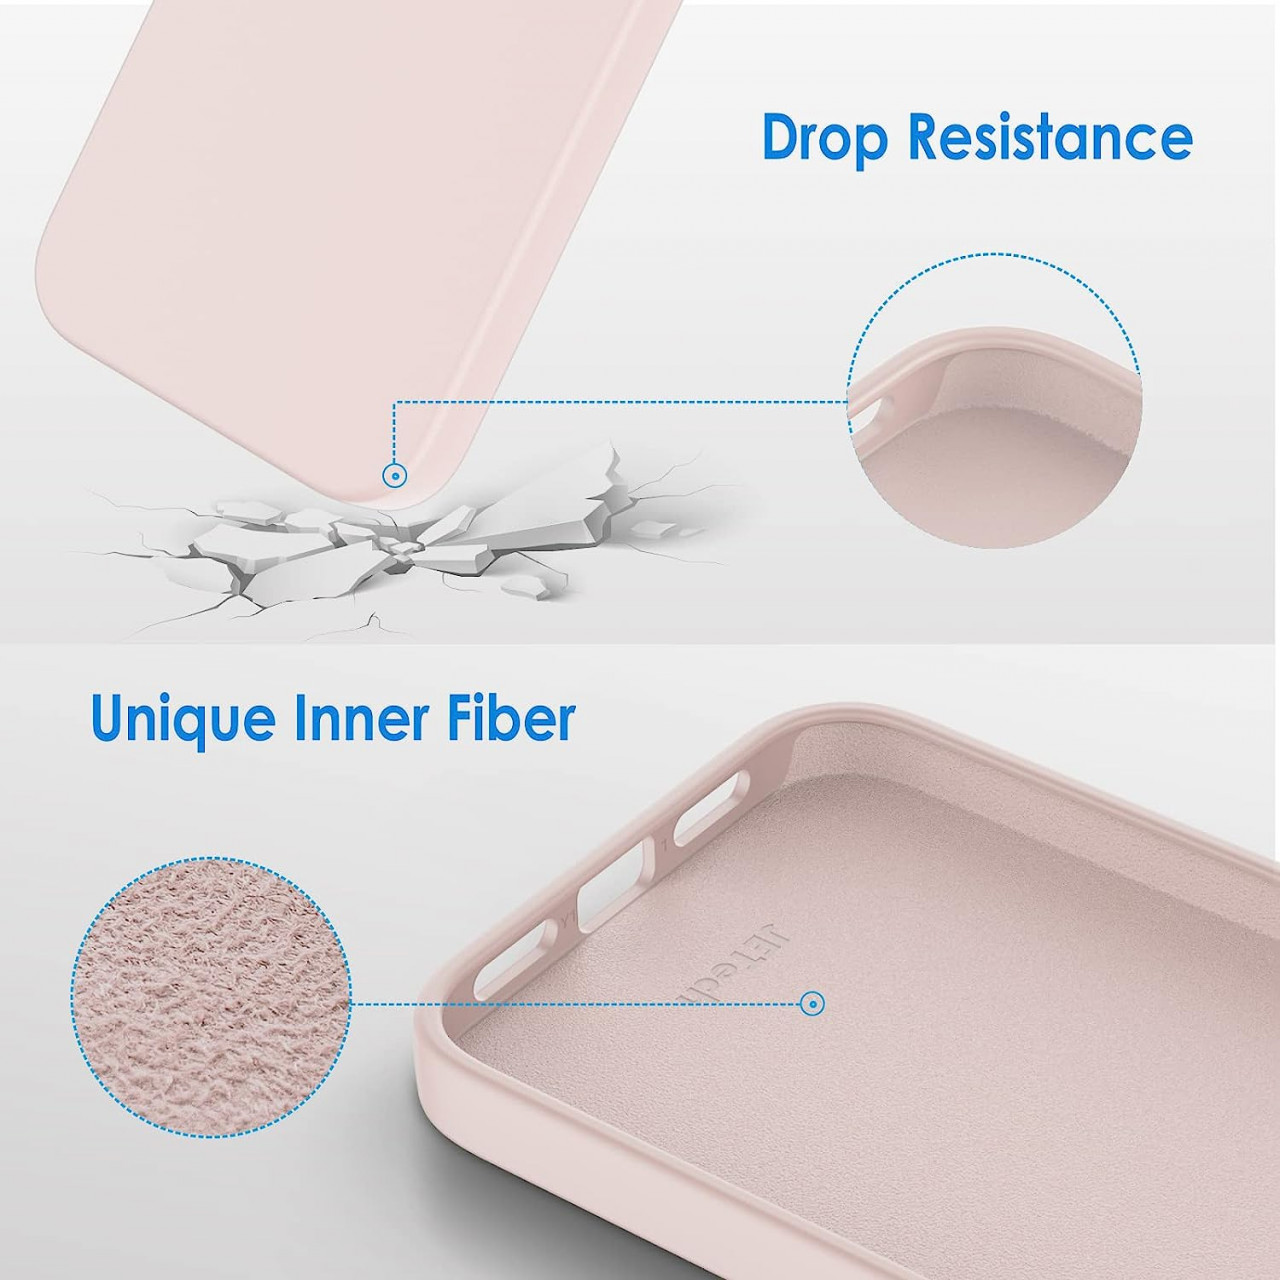 Poze Husa de protectie pentru iPhone 12 Pro JETech, silicont, roz, 6,7 inchi